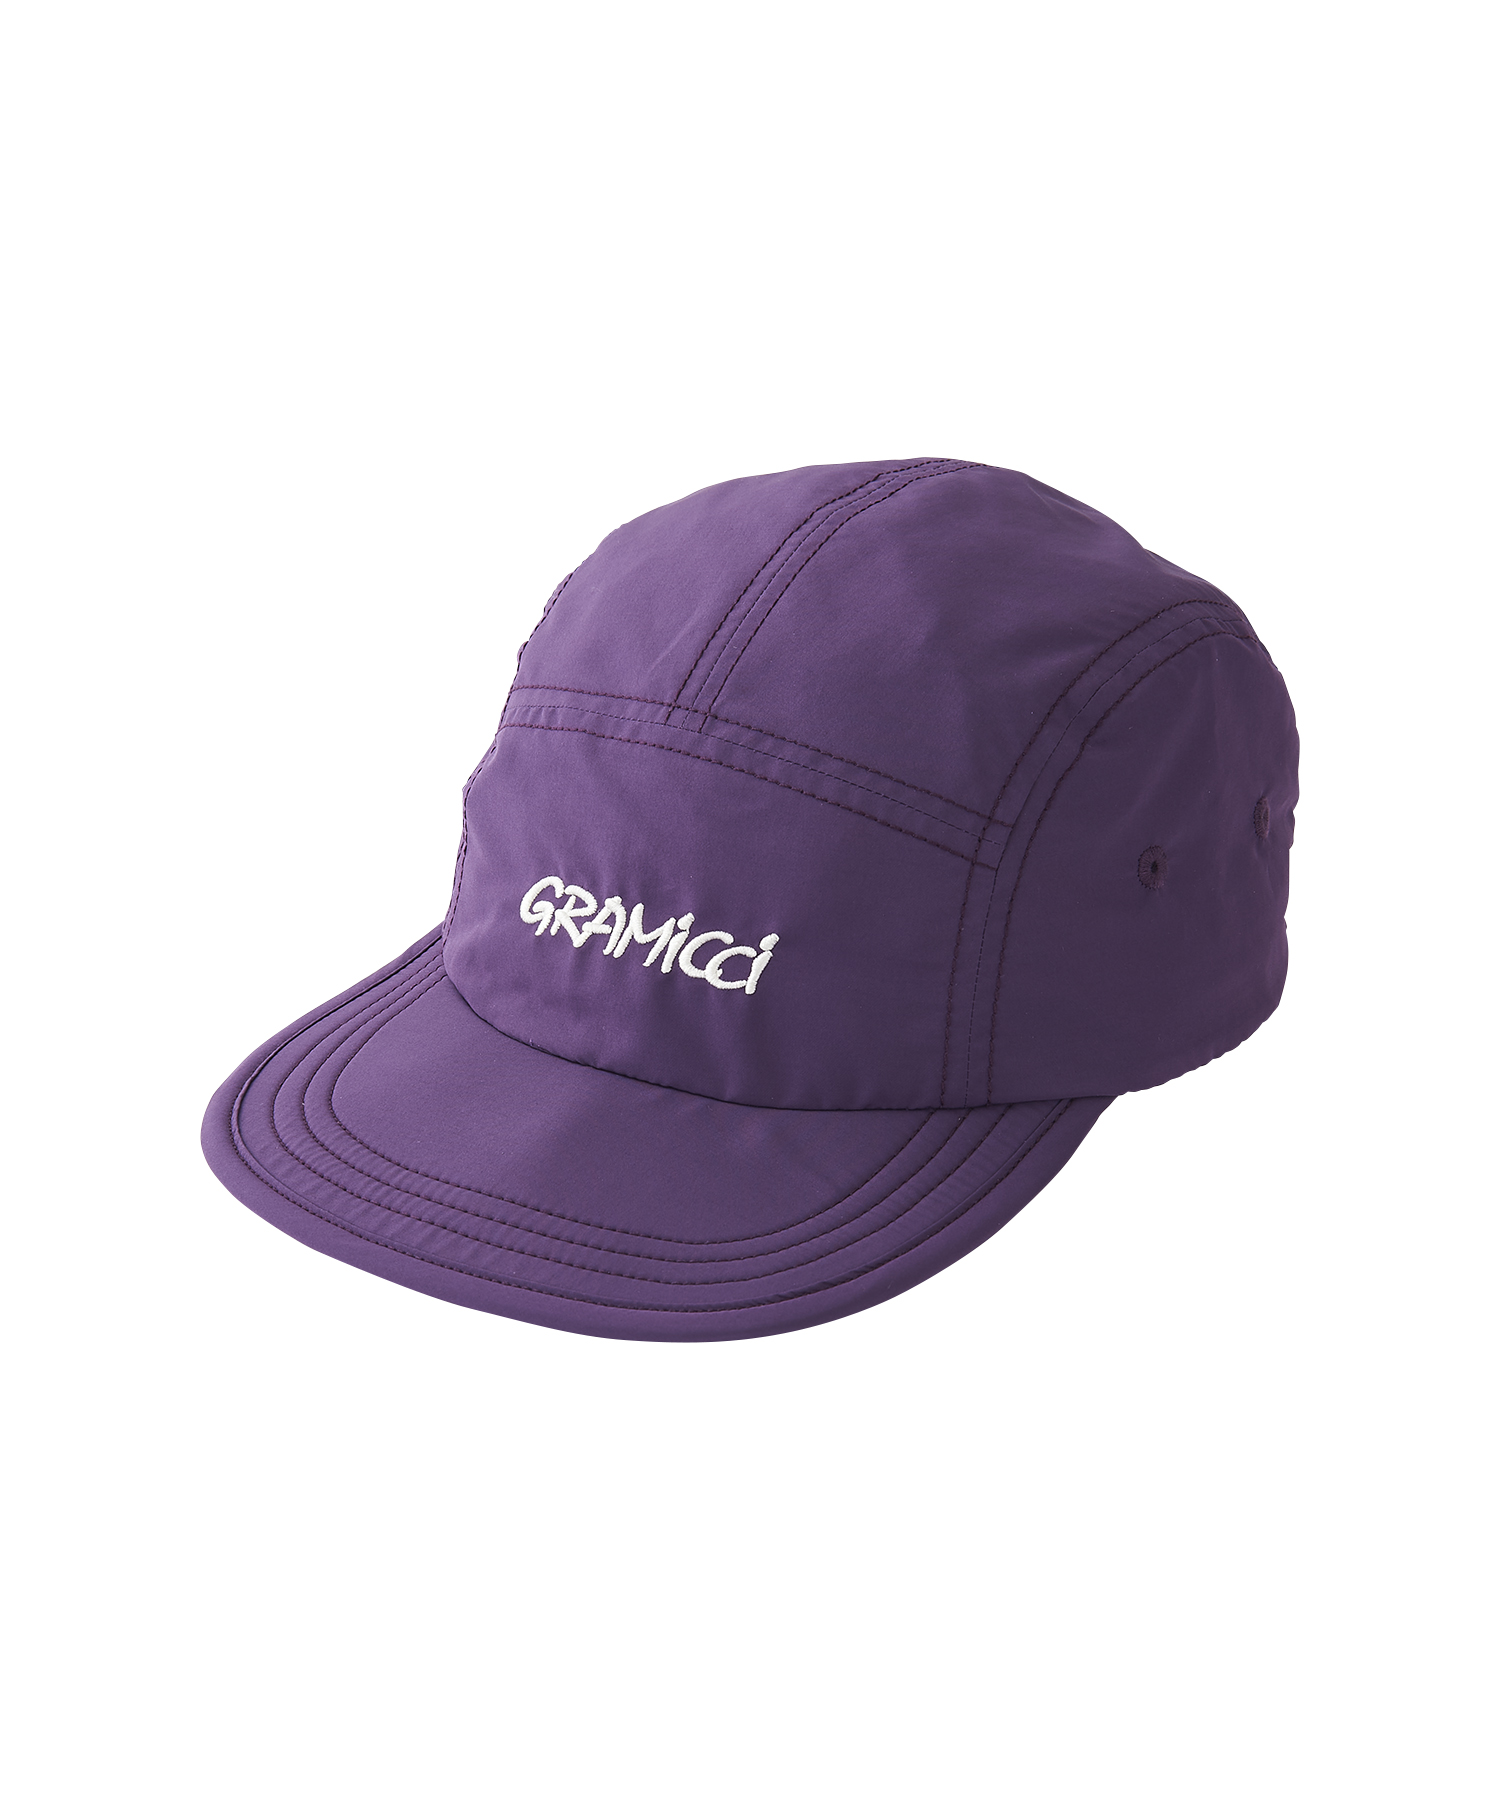 Gramicci Shell Jet Cap - Purple